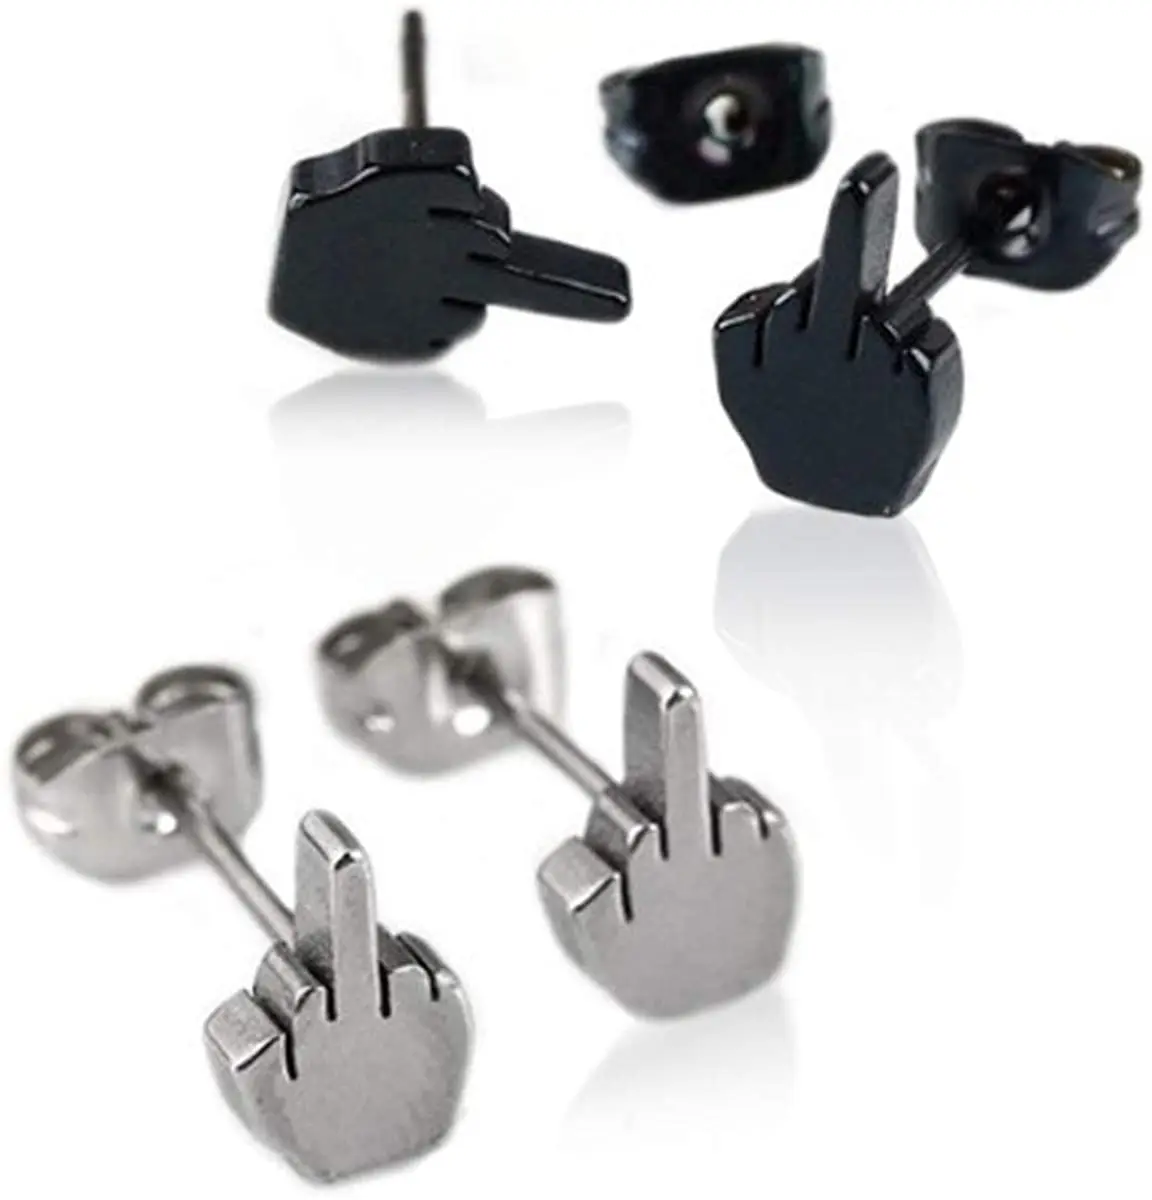 

1pair Men's Fashion Punk Cool Finger Provocative Ear Studs Earrings Gothic Pierced Earrings for Women Jewelry Jewelry Gifts